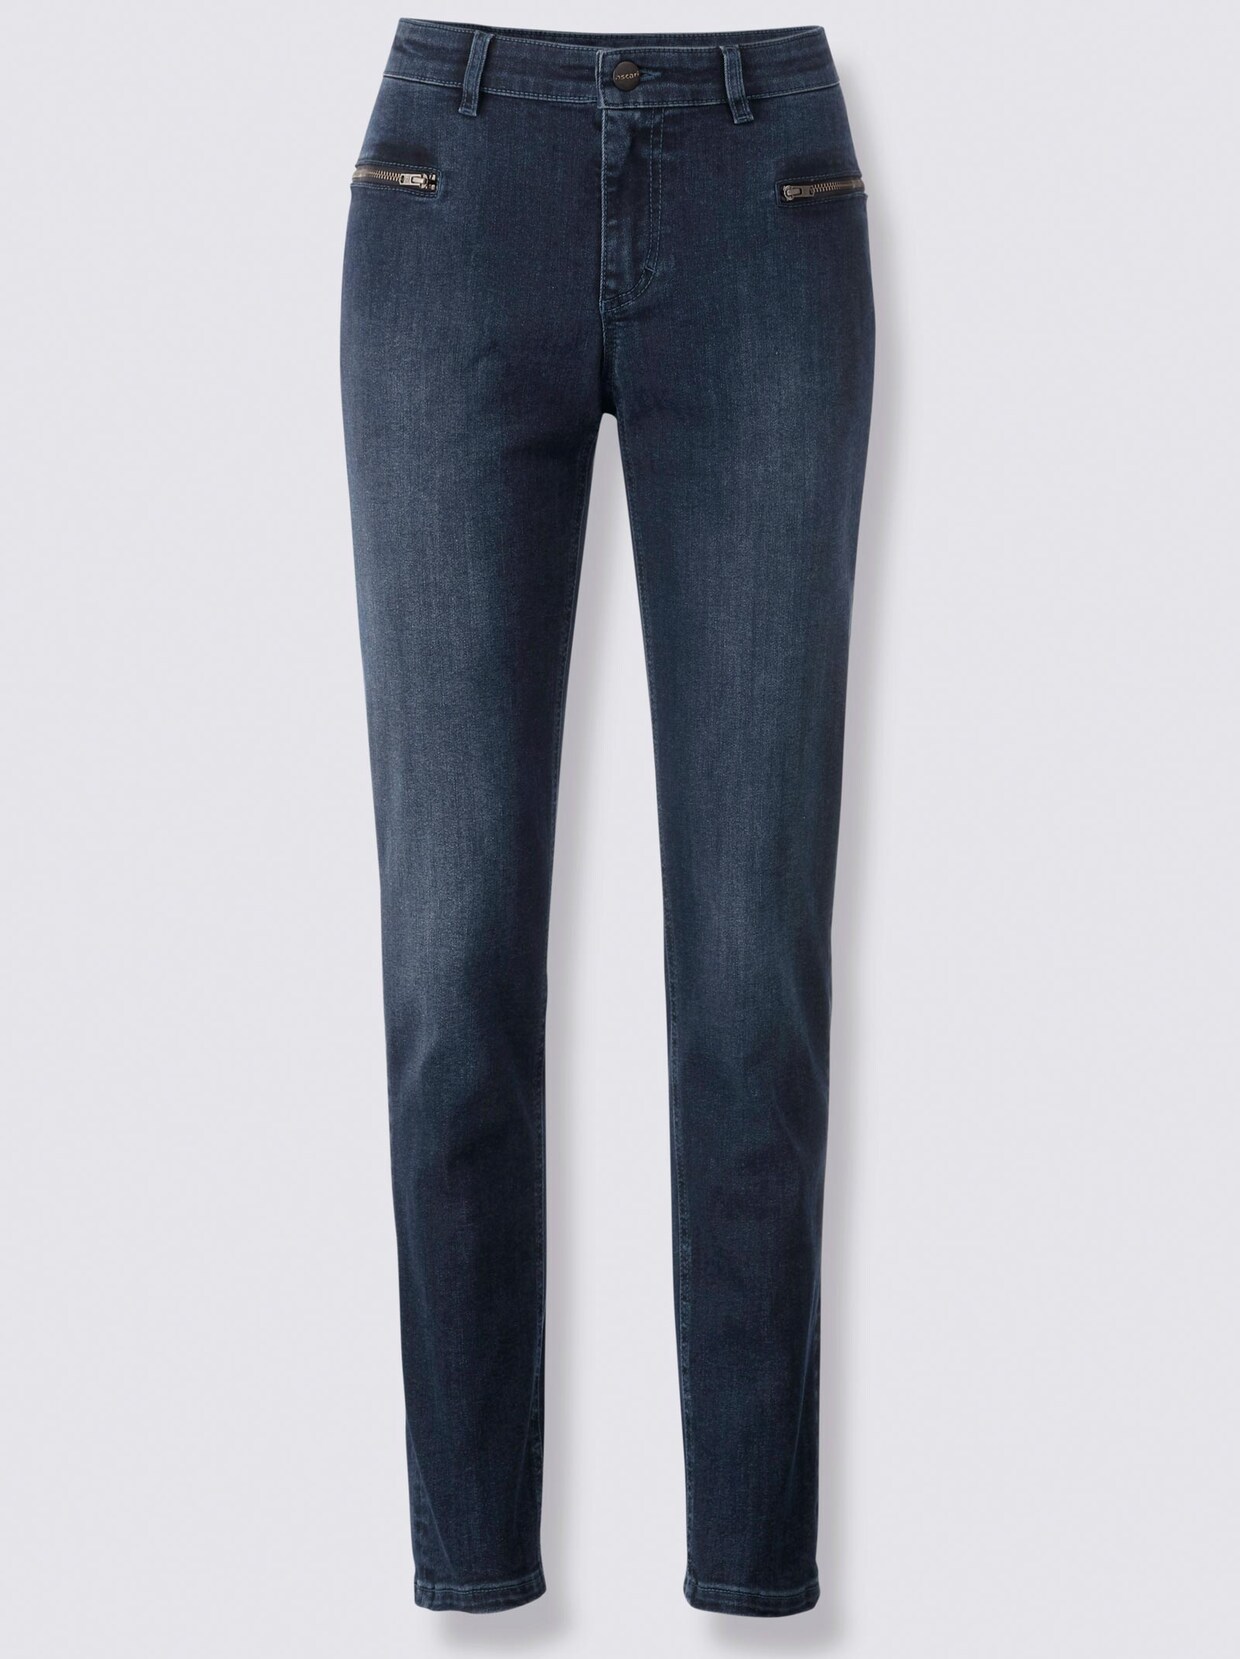 Ascari Jeans - dark blue